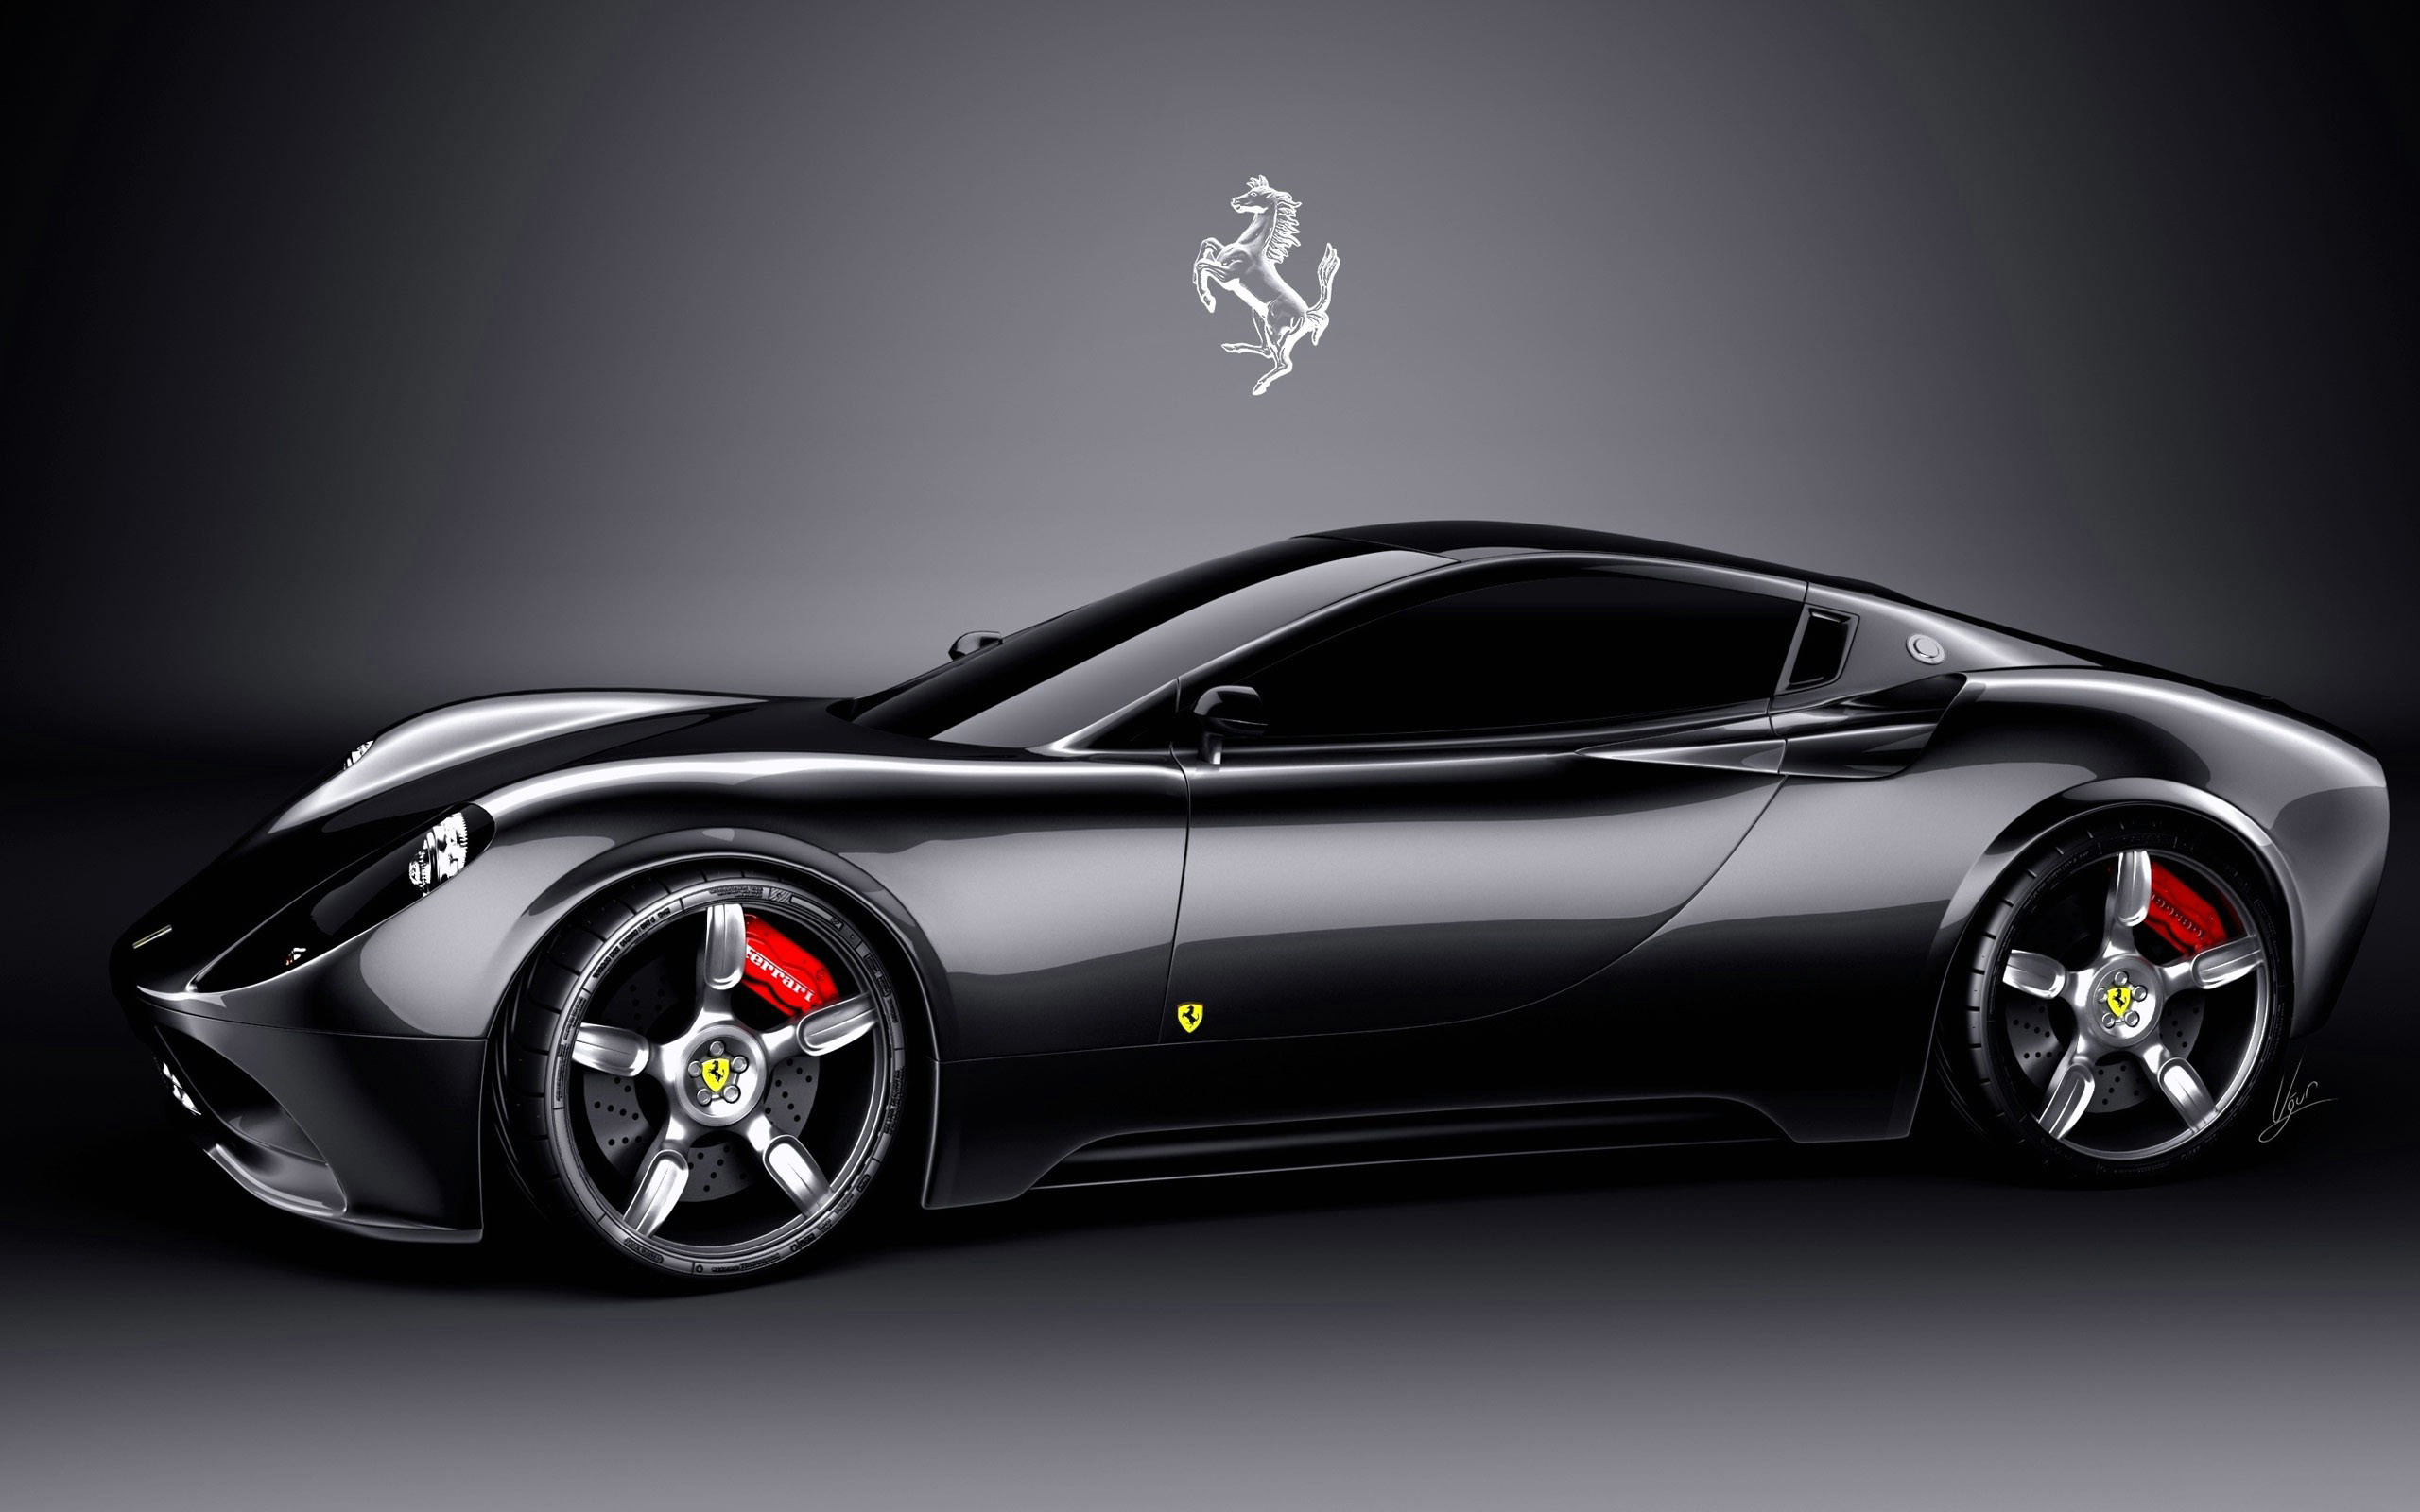 2560x1600 Ferrari Concept Car wallpapers Wallpapers) – Wallpapers For Desktop